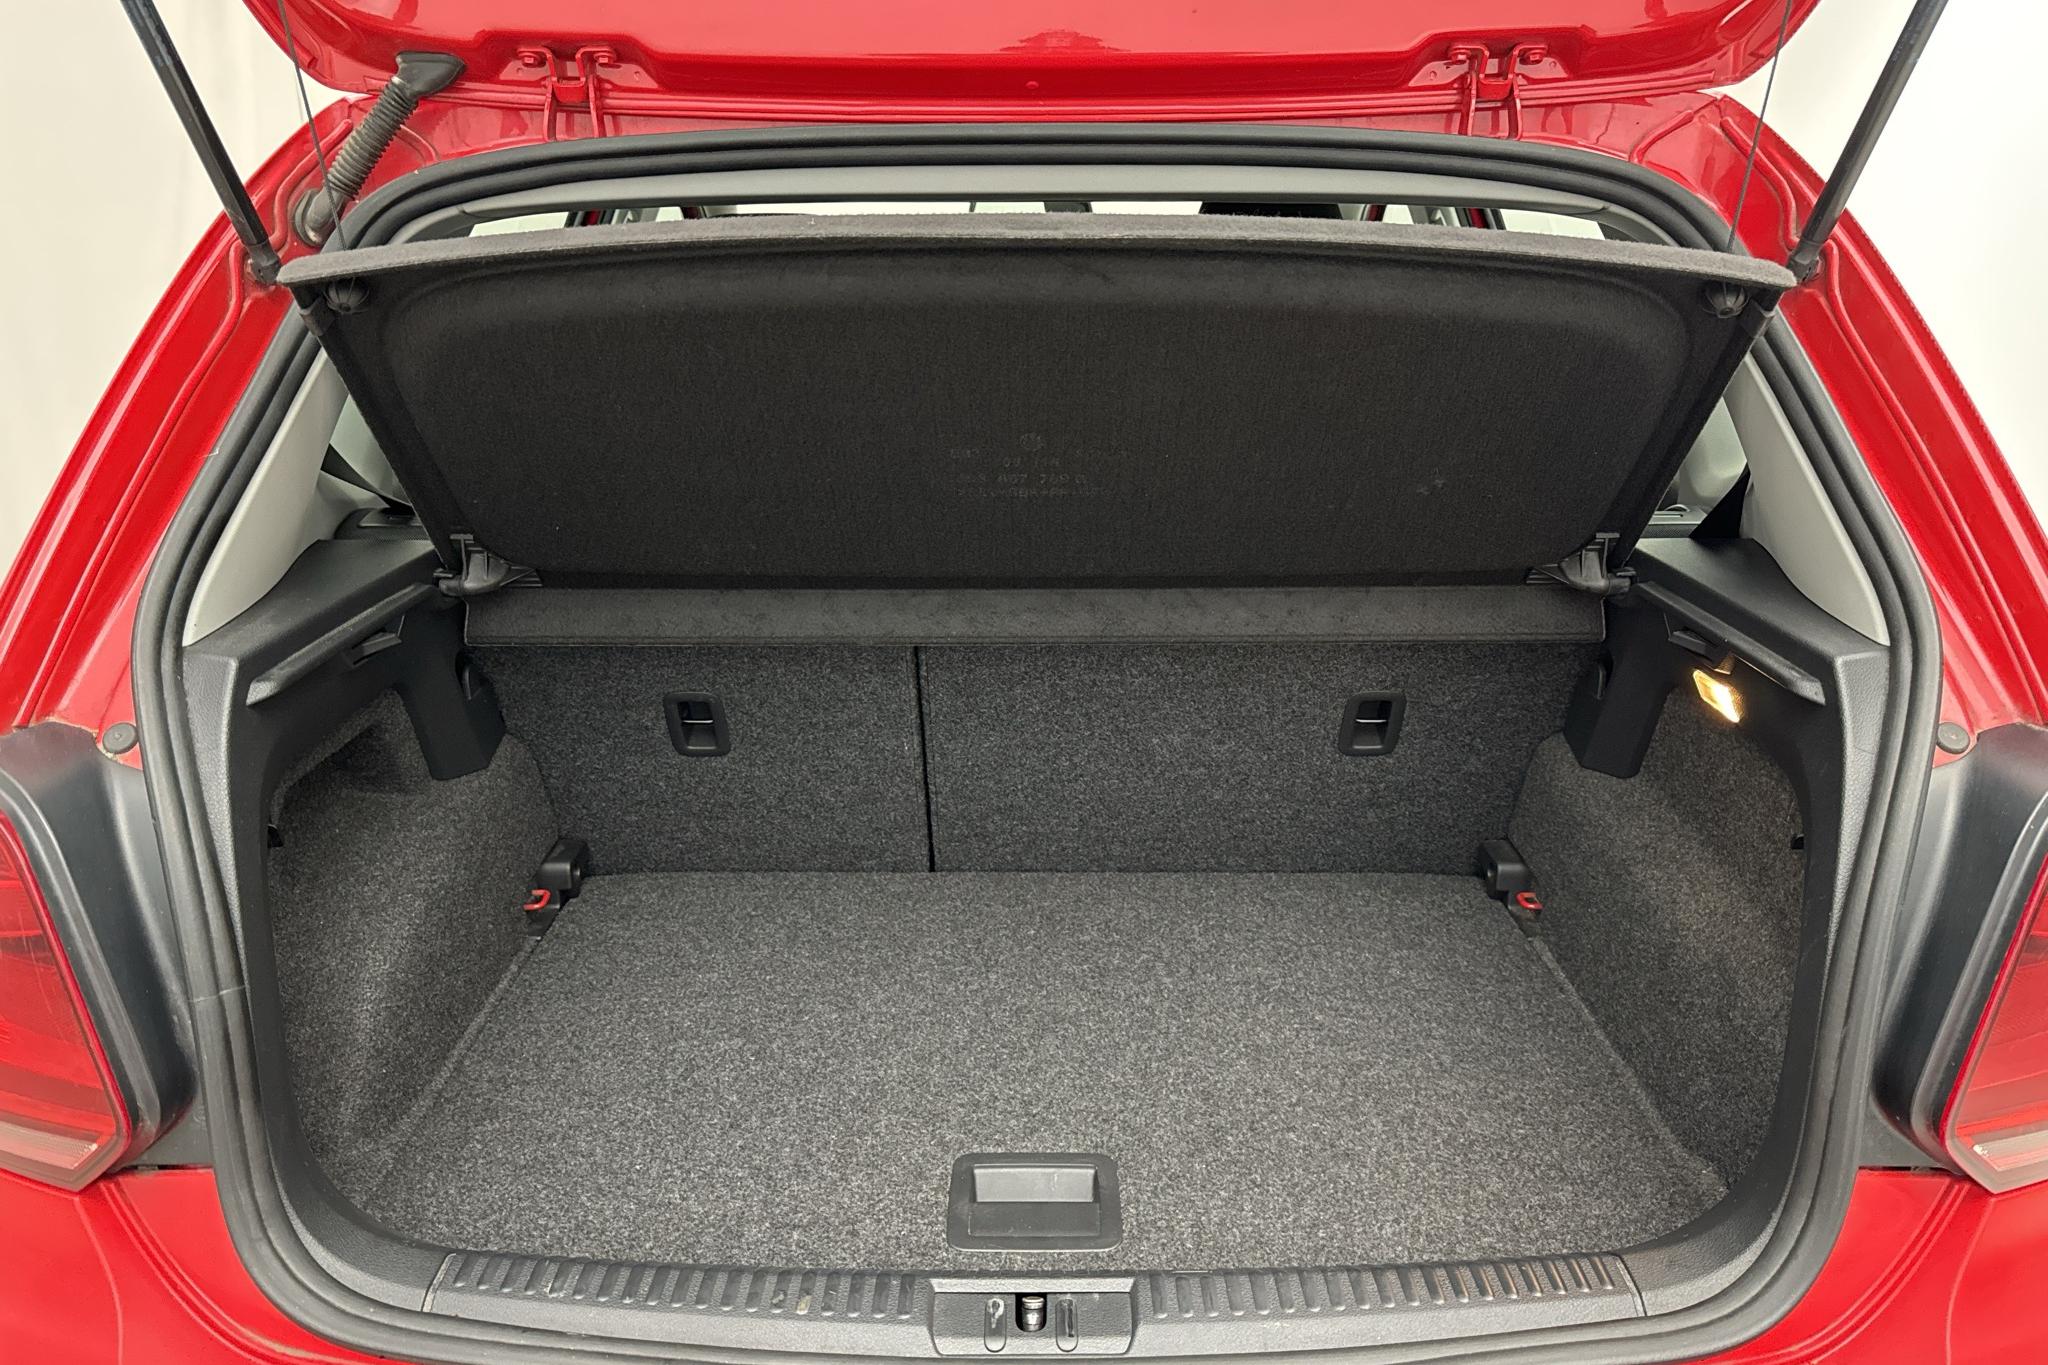 VW Polo 1.2 TSI 5dr (90hk) - 1 630 mil - Manuell - röd - 2016